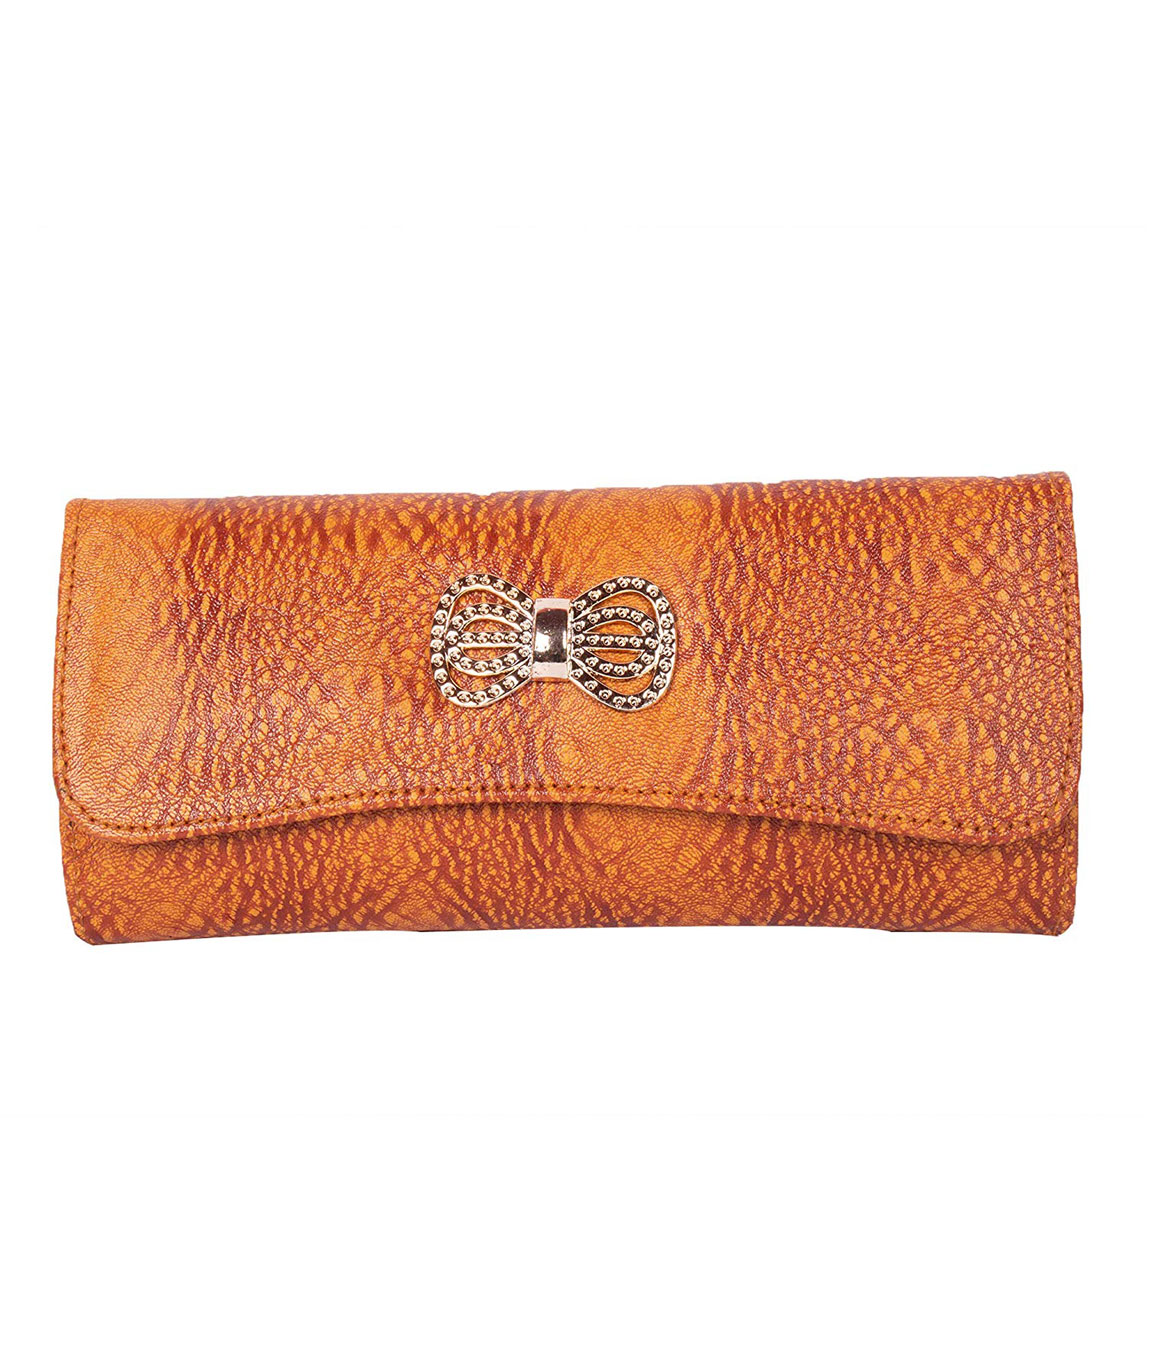 Women Girls Leather Wallets Lady Fashion Long Purse Handbag Women`s Clutches/Genuine Leather Wallet/Purse For Women and Girls(orange)